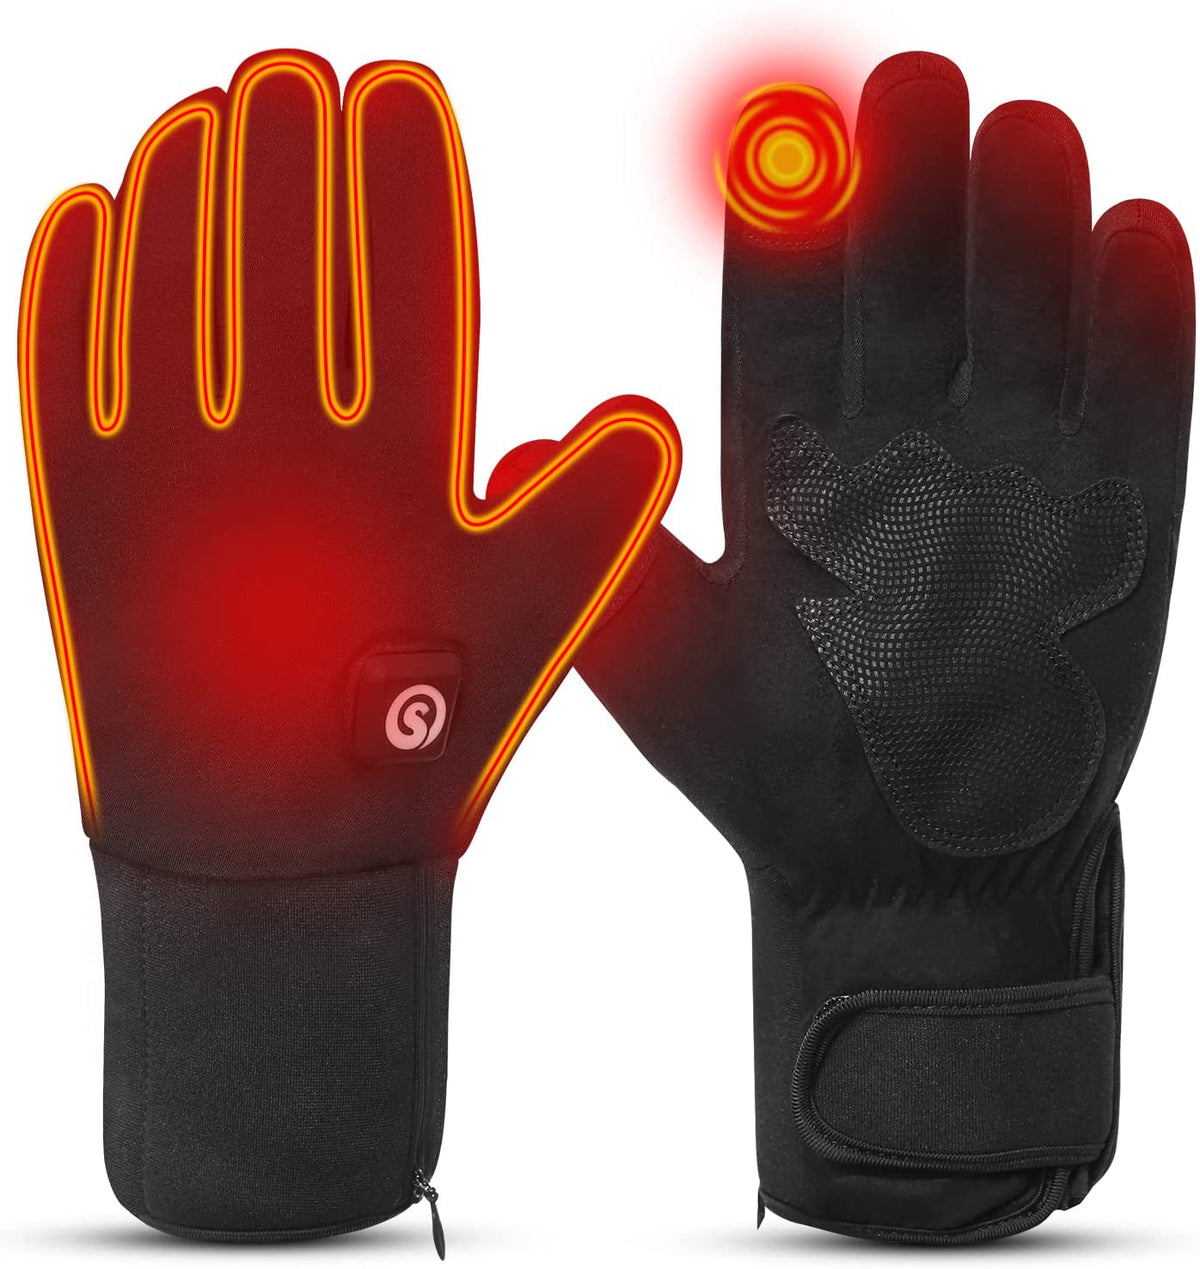 SAVIOR HEAT 7.4V,2200MAH Rechargeable Battery For Heated Gloves Heated  Socks